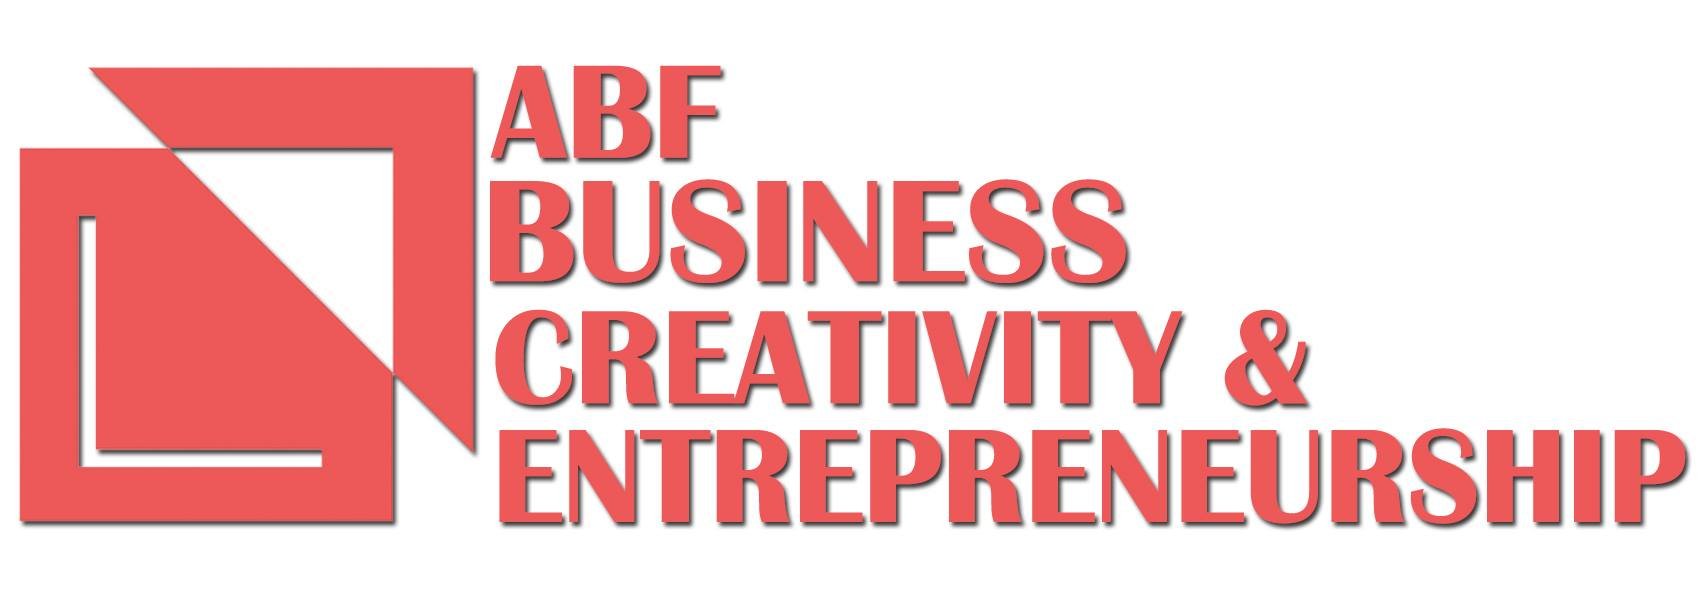 Abf Business Creativity Entrepreneurship Abfbusiness Twitter